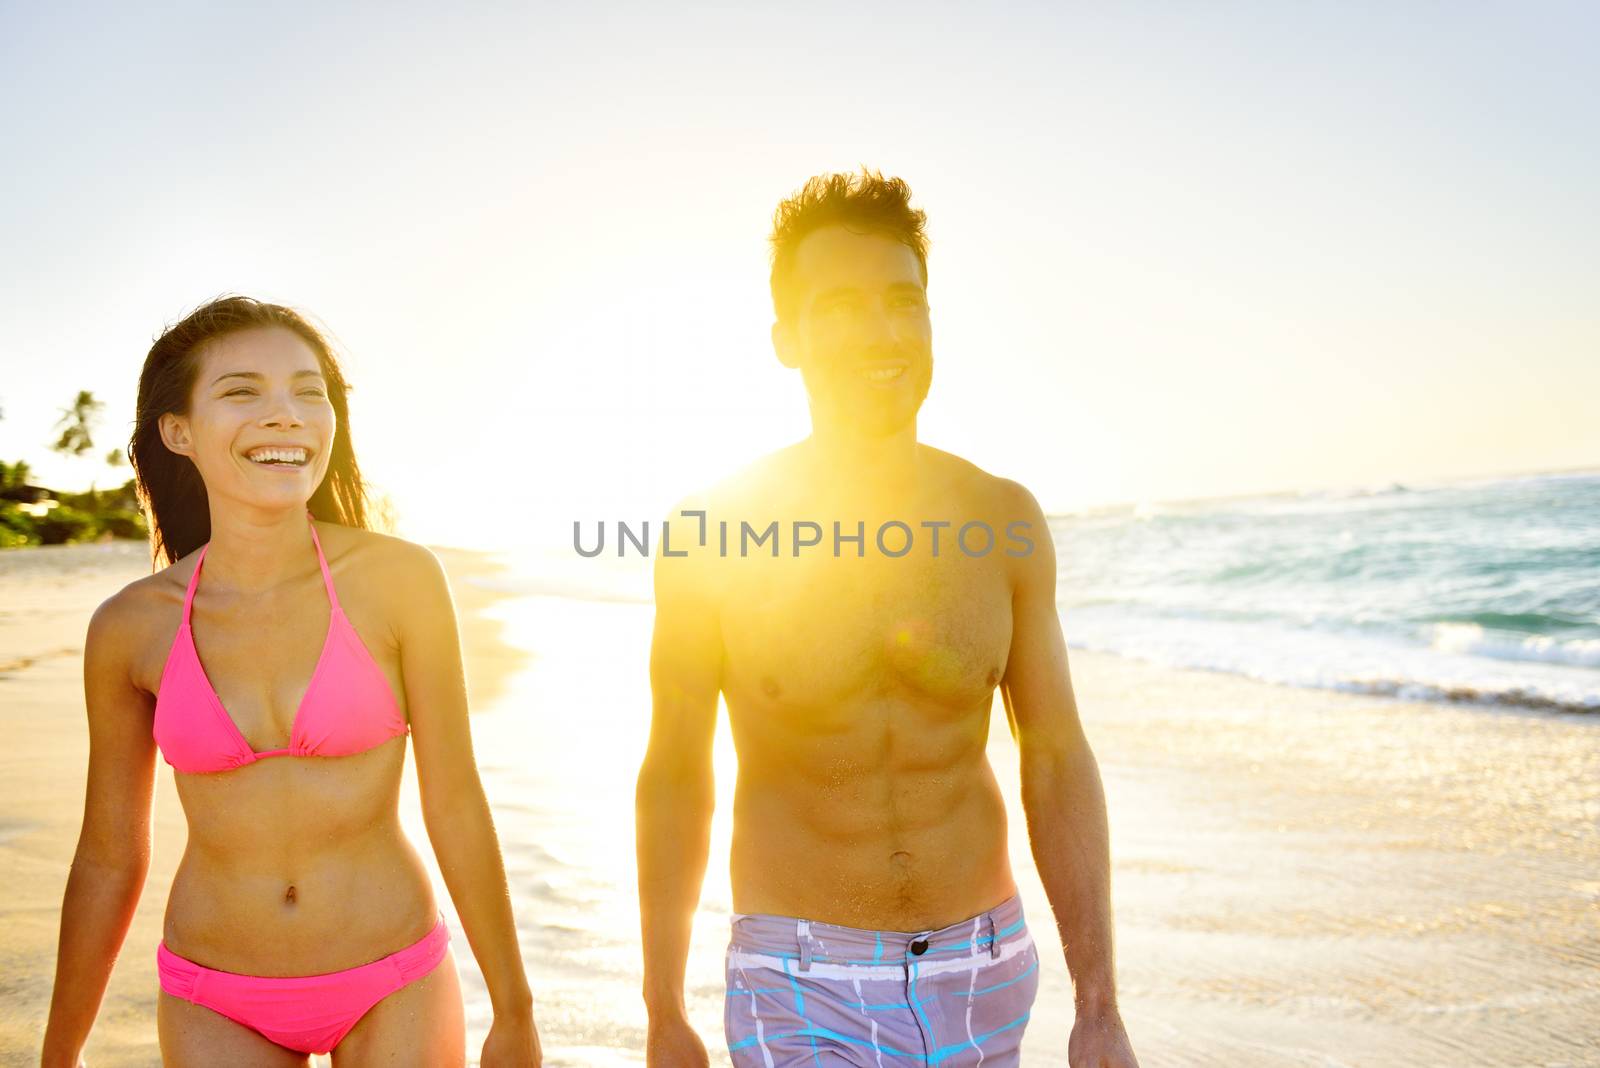 Beach Lifestyle Couple Walking on Beach at Sunset enjoying healthy active lifestyle in summer sun. People in beachwear, woman in bikini and man in casual swim shorts.